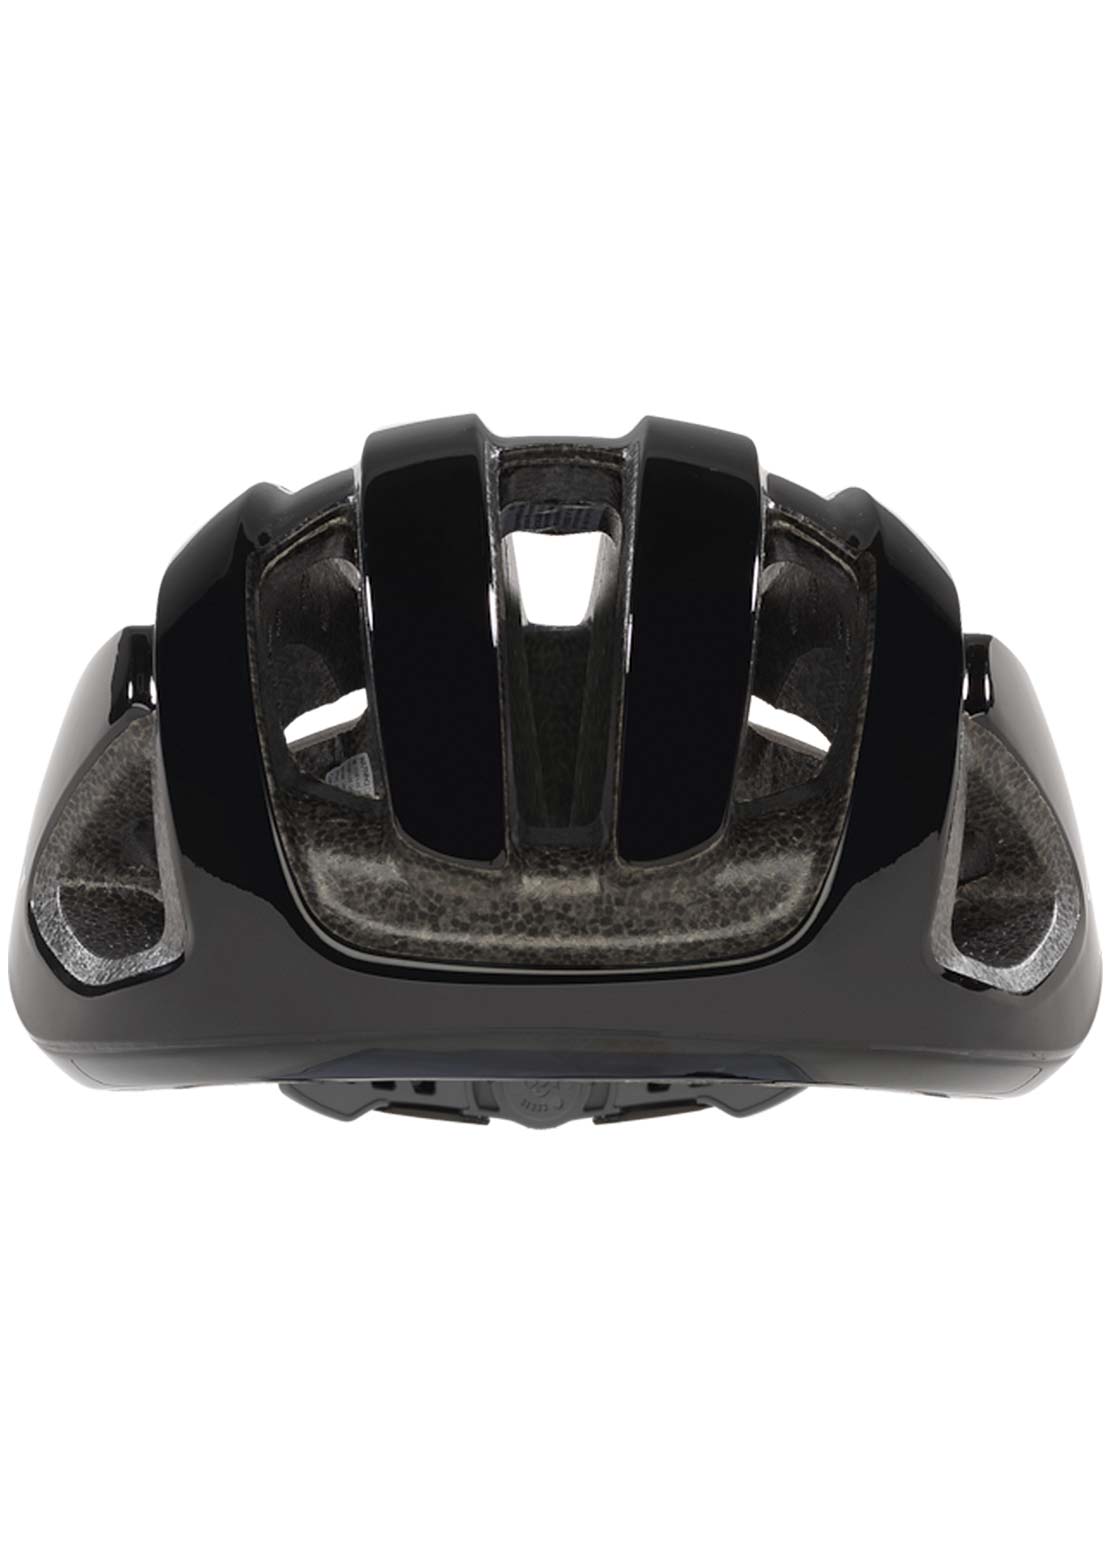 Oakley ARO 3 Lite Mountain Bike Helmet Black